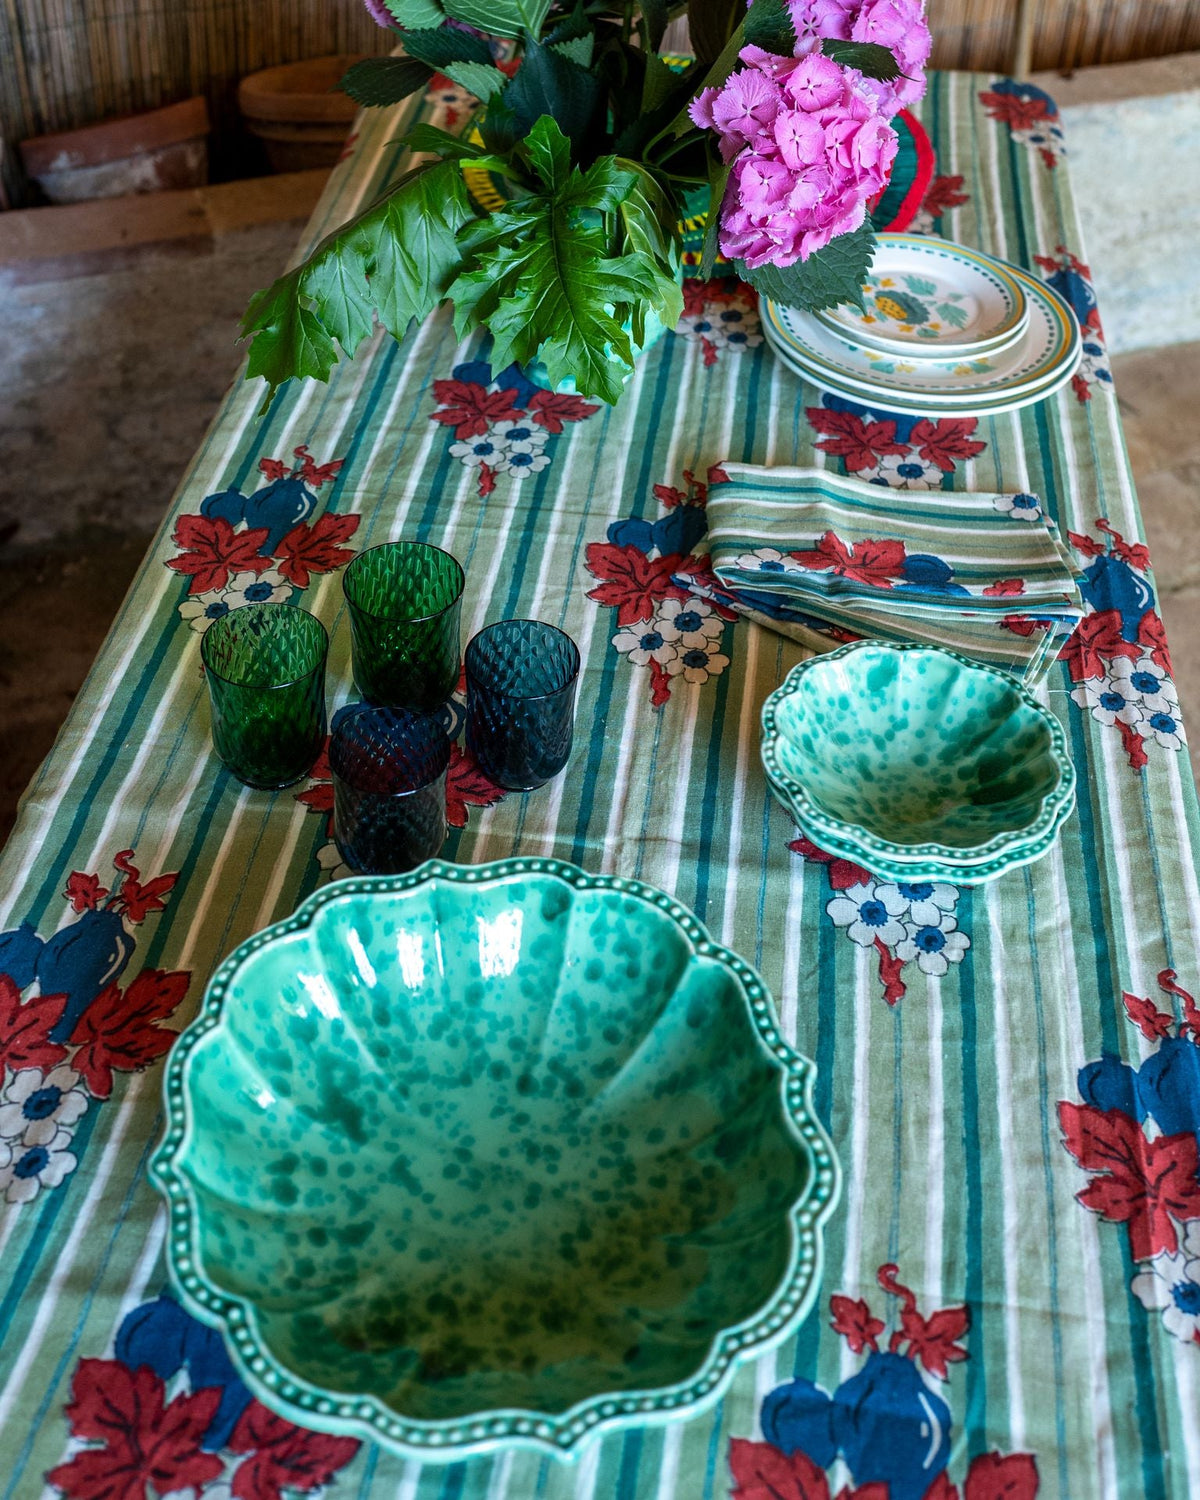 Speckled Serving Bowl in Green